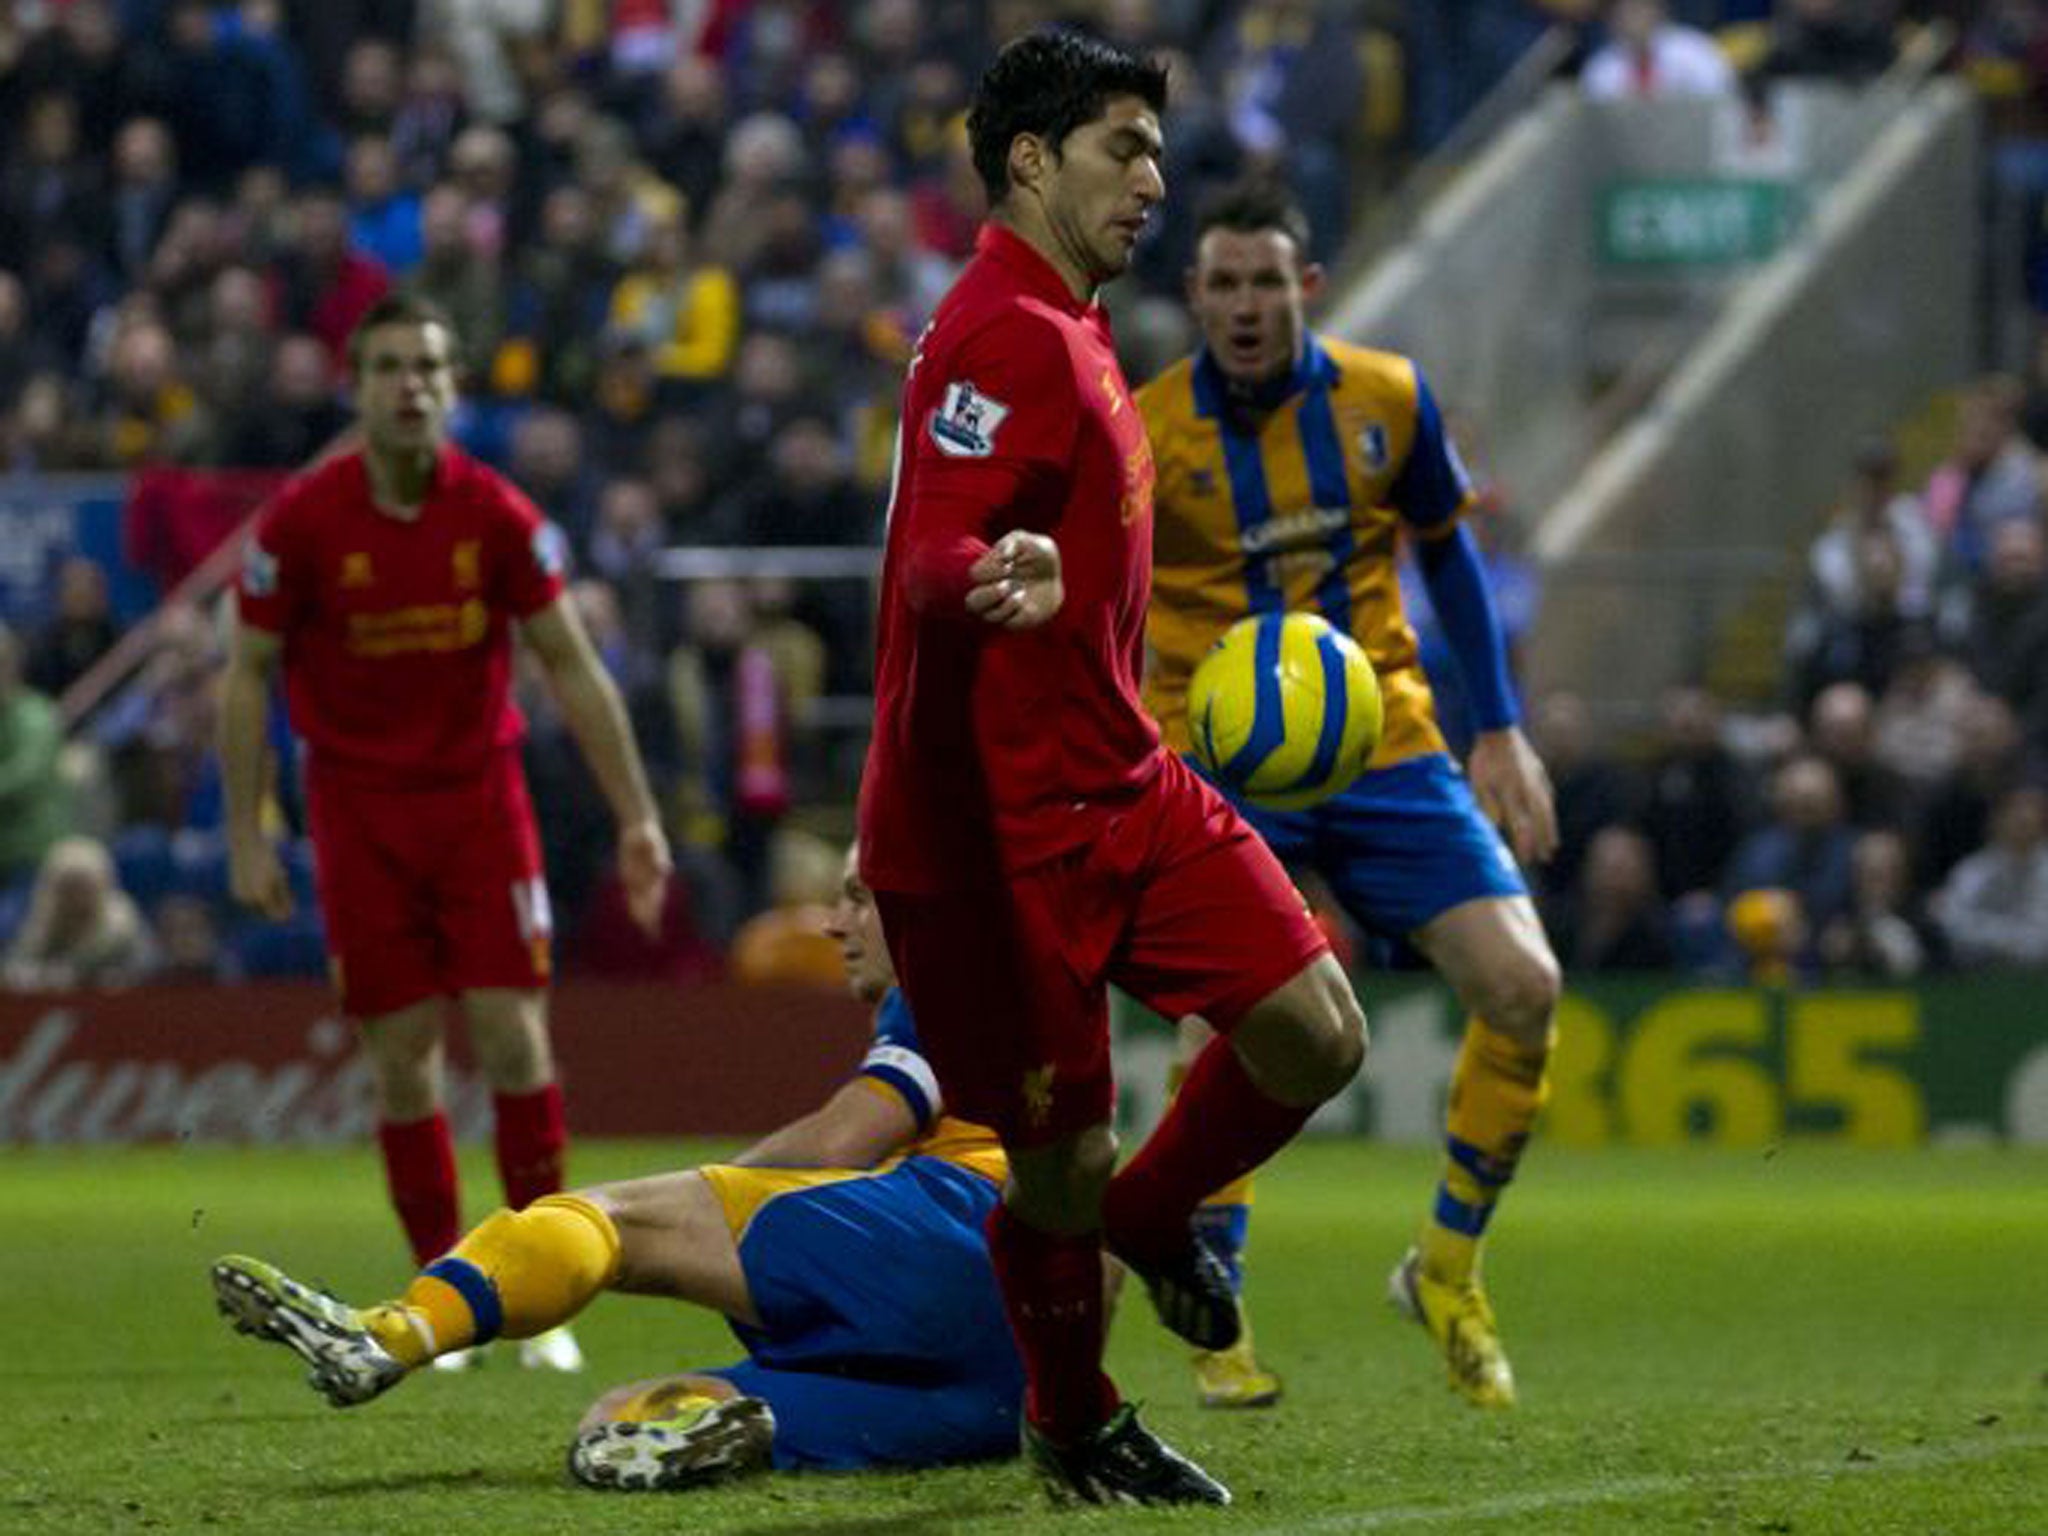 Luis Suarez’s controversial handball against Mansfield